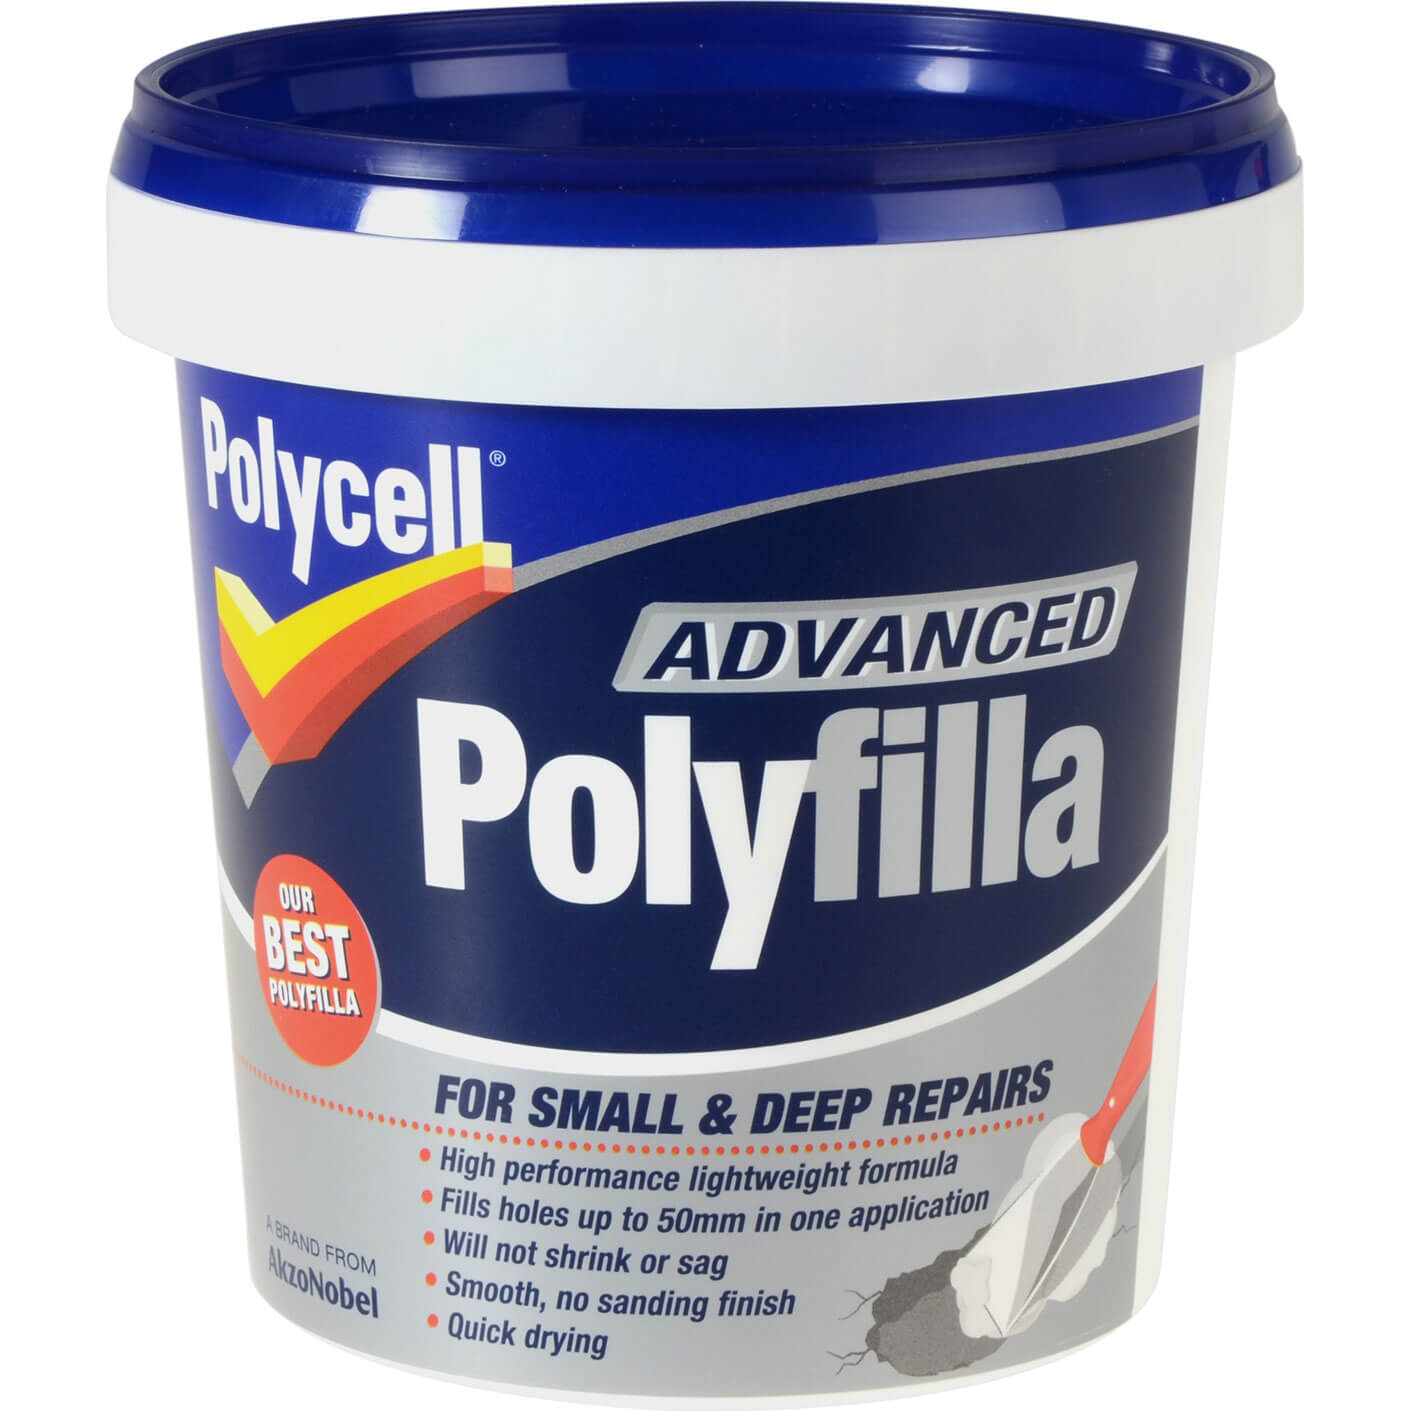 Image of Polycell Advanced Polyfilla 600ml